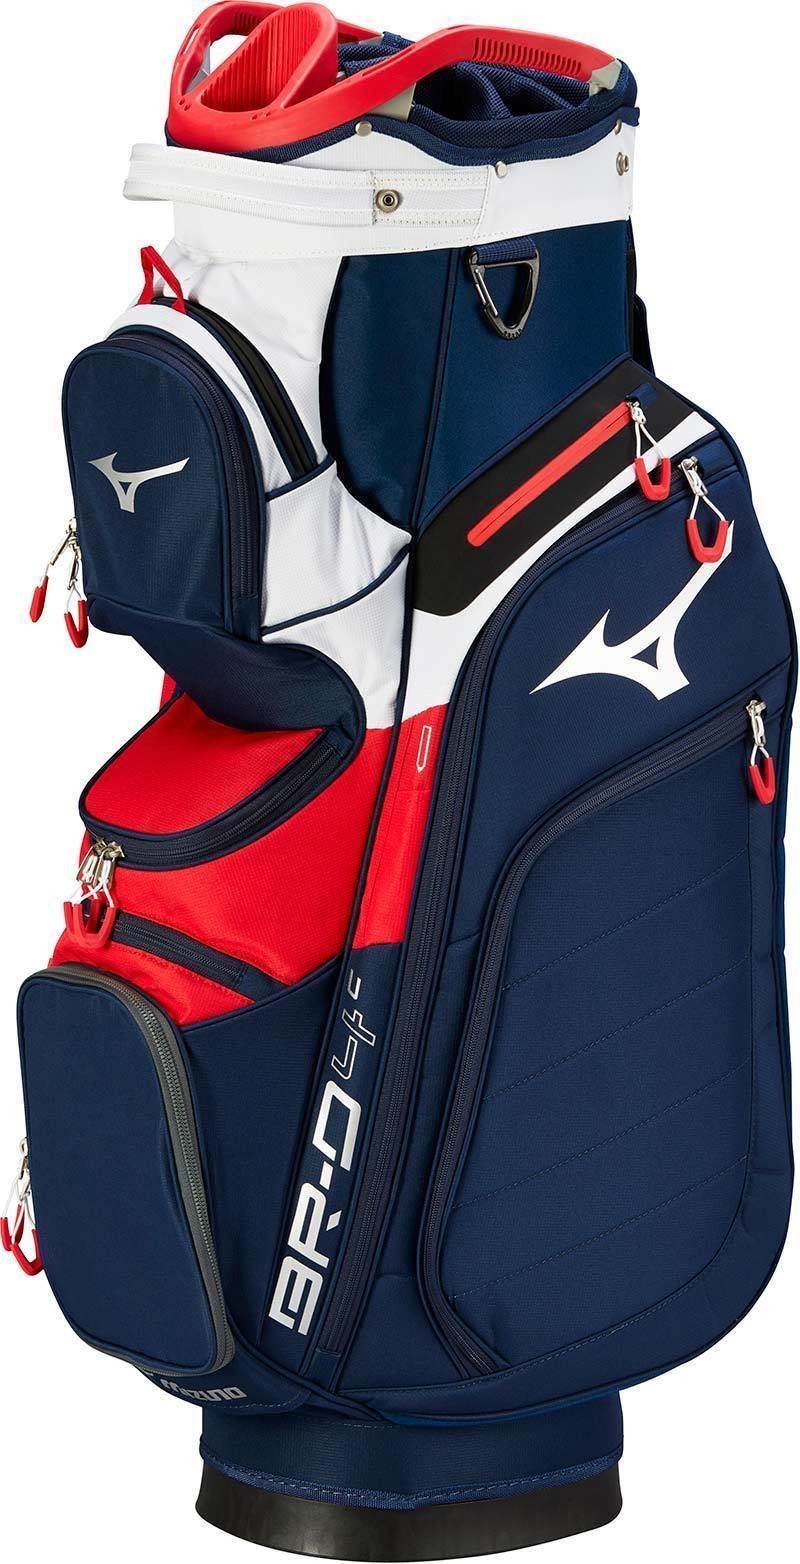 Golf Bag Mizuno BR-D4 Navy-Red Golf Bag